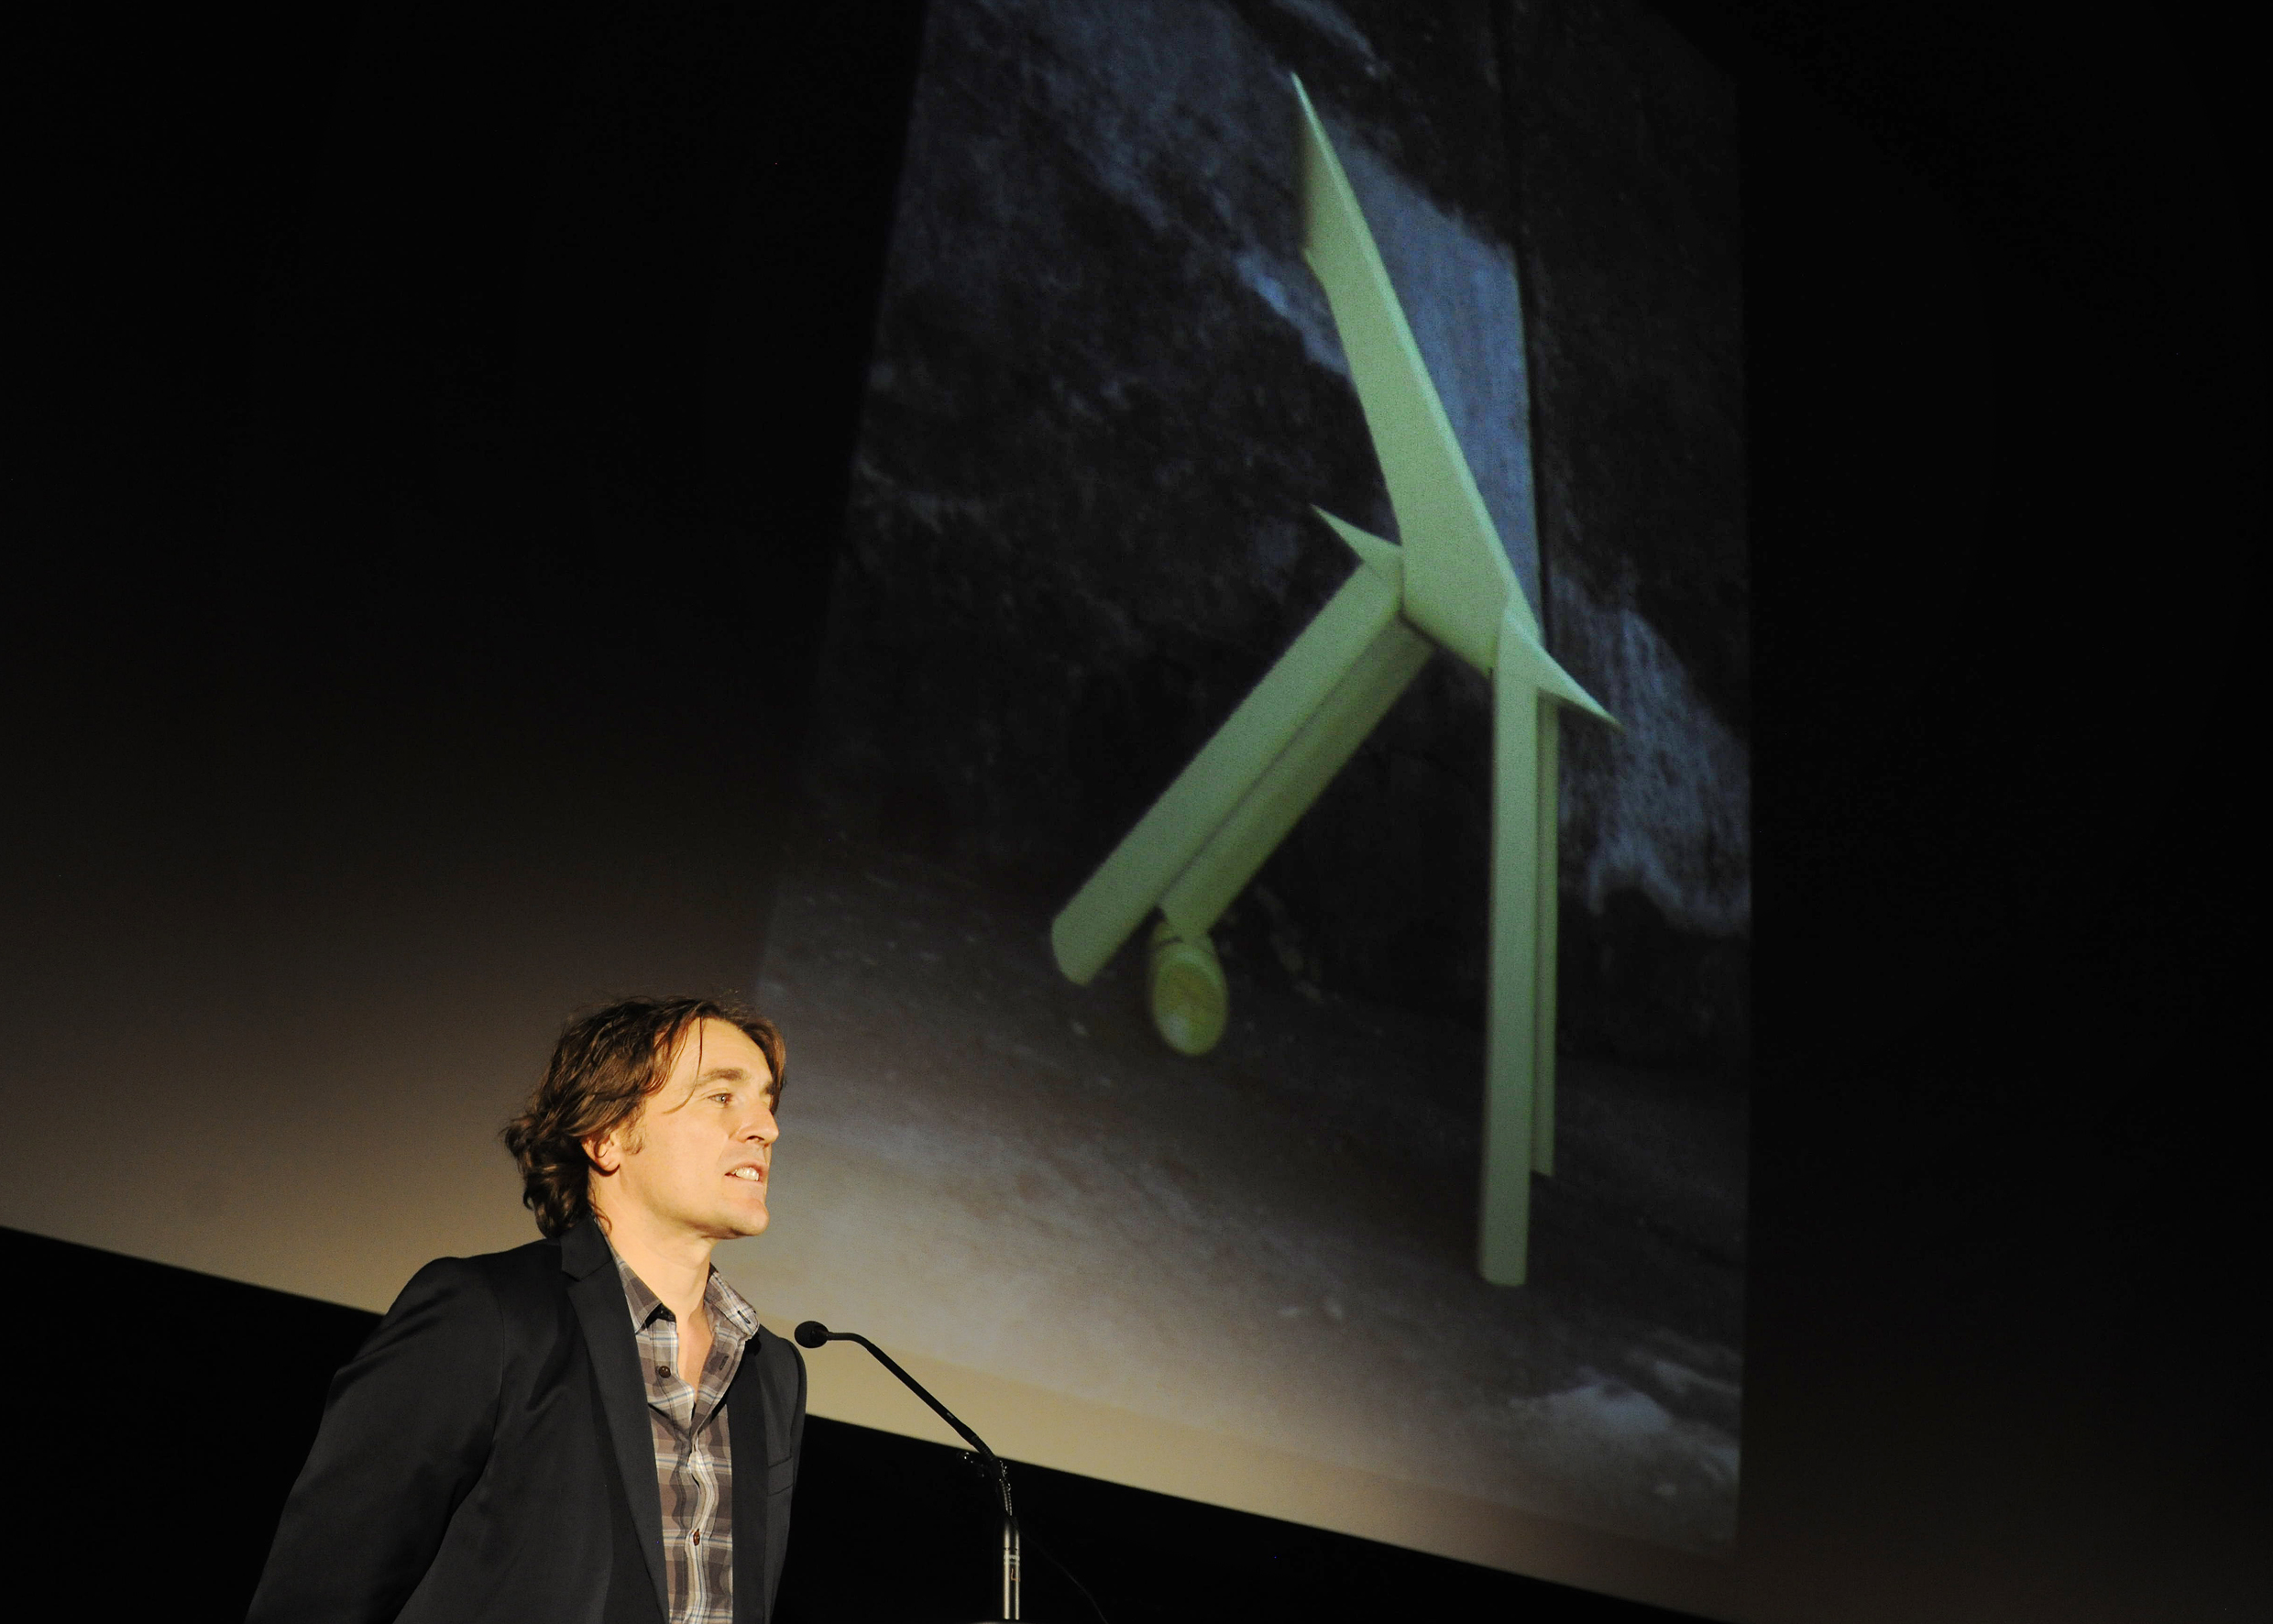 Preisverleihung im Cinéma Capitole Lausanne : Jörg Boner, Grand Prix Design 2011